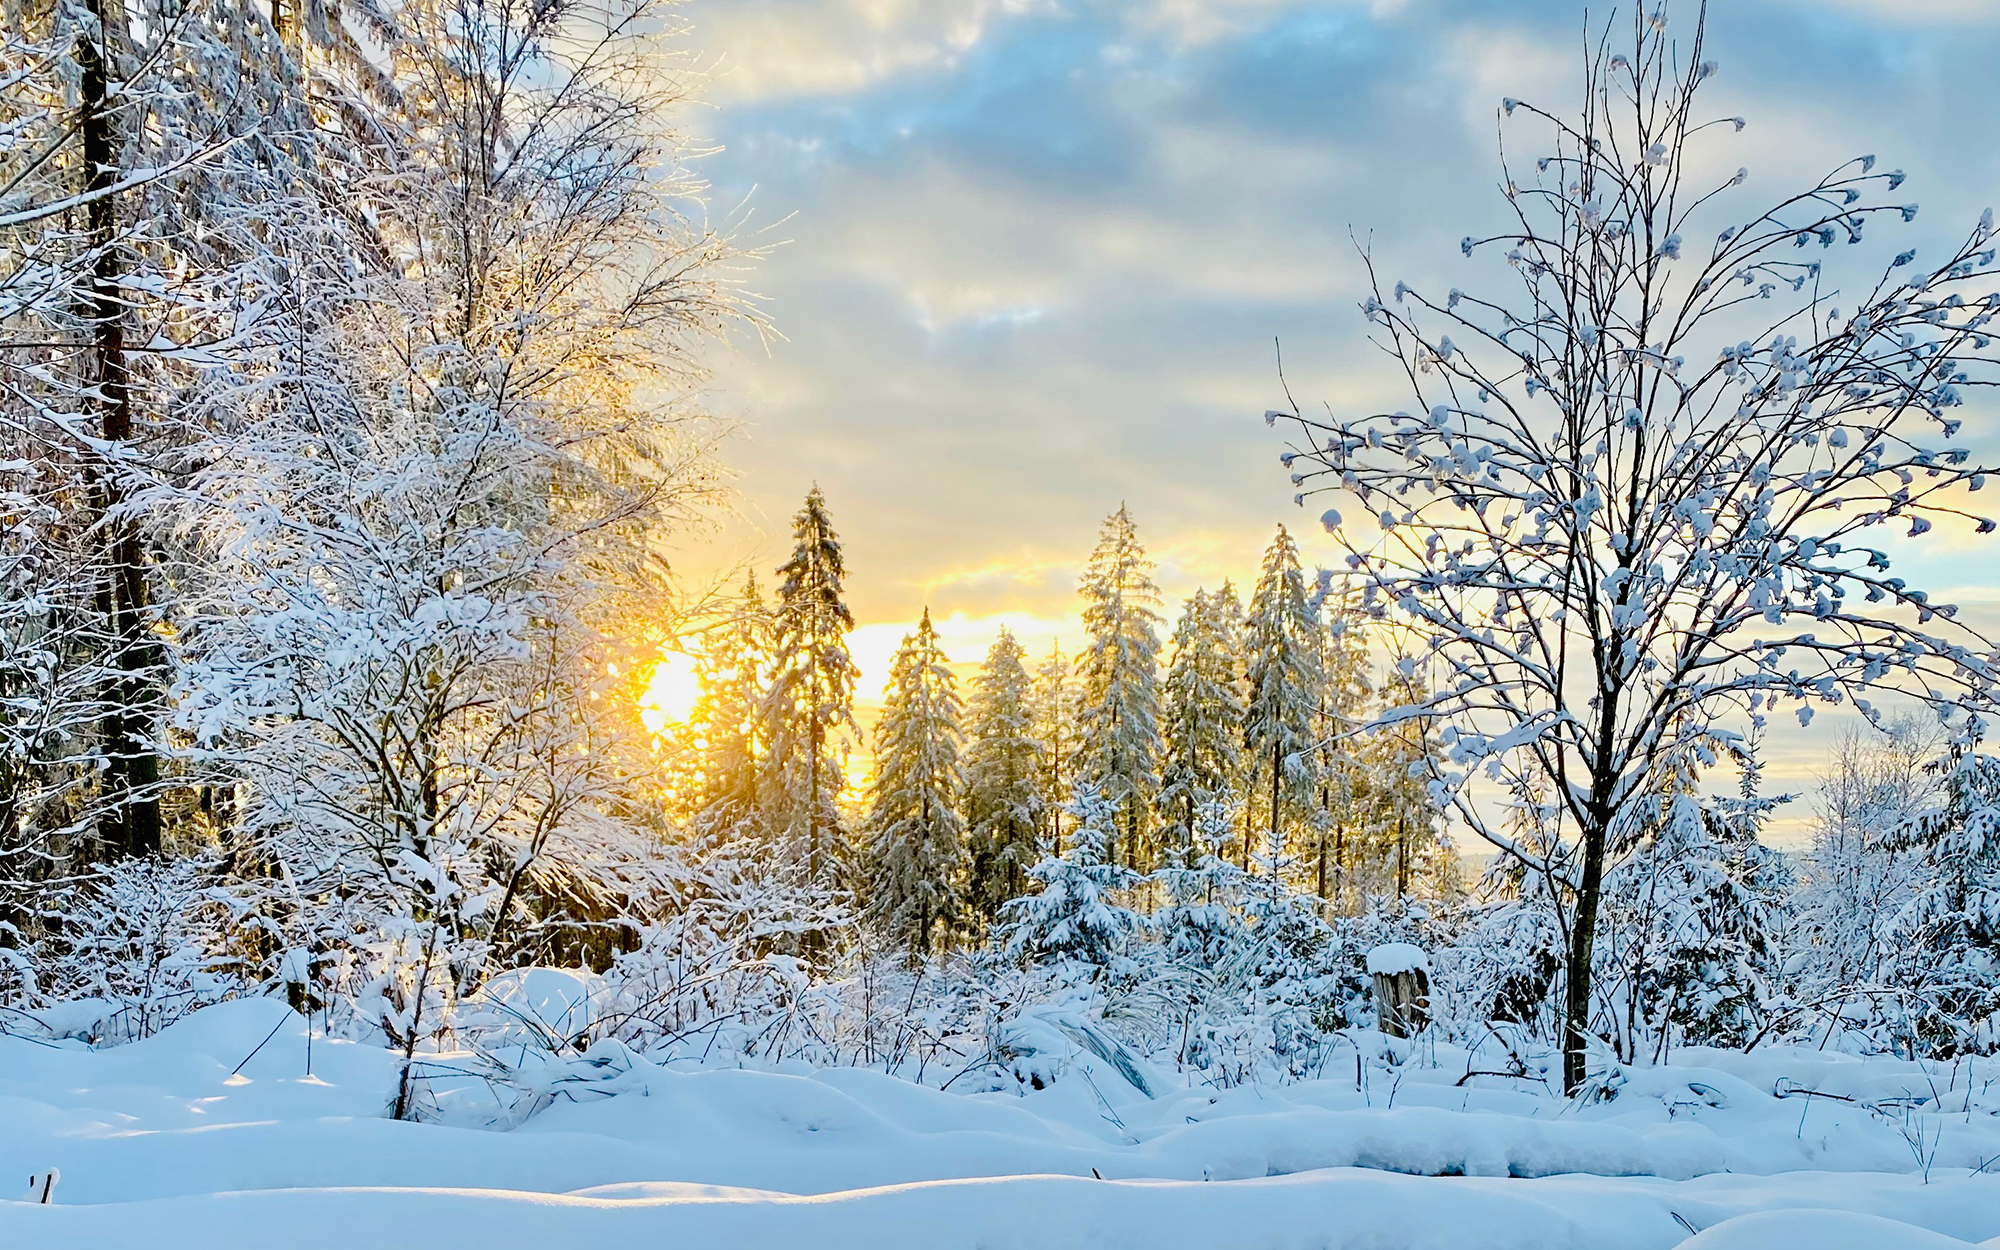 sunny snowy wooded winter scene